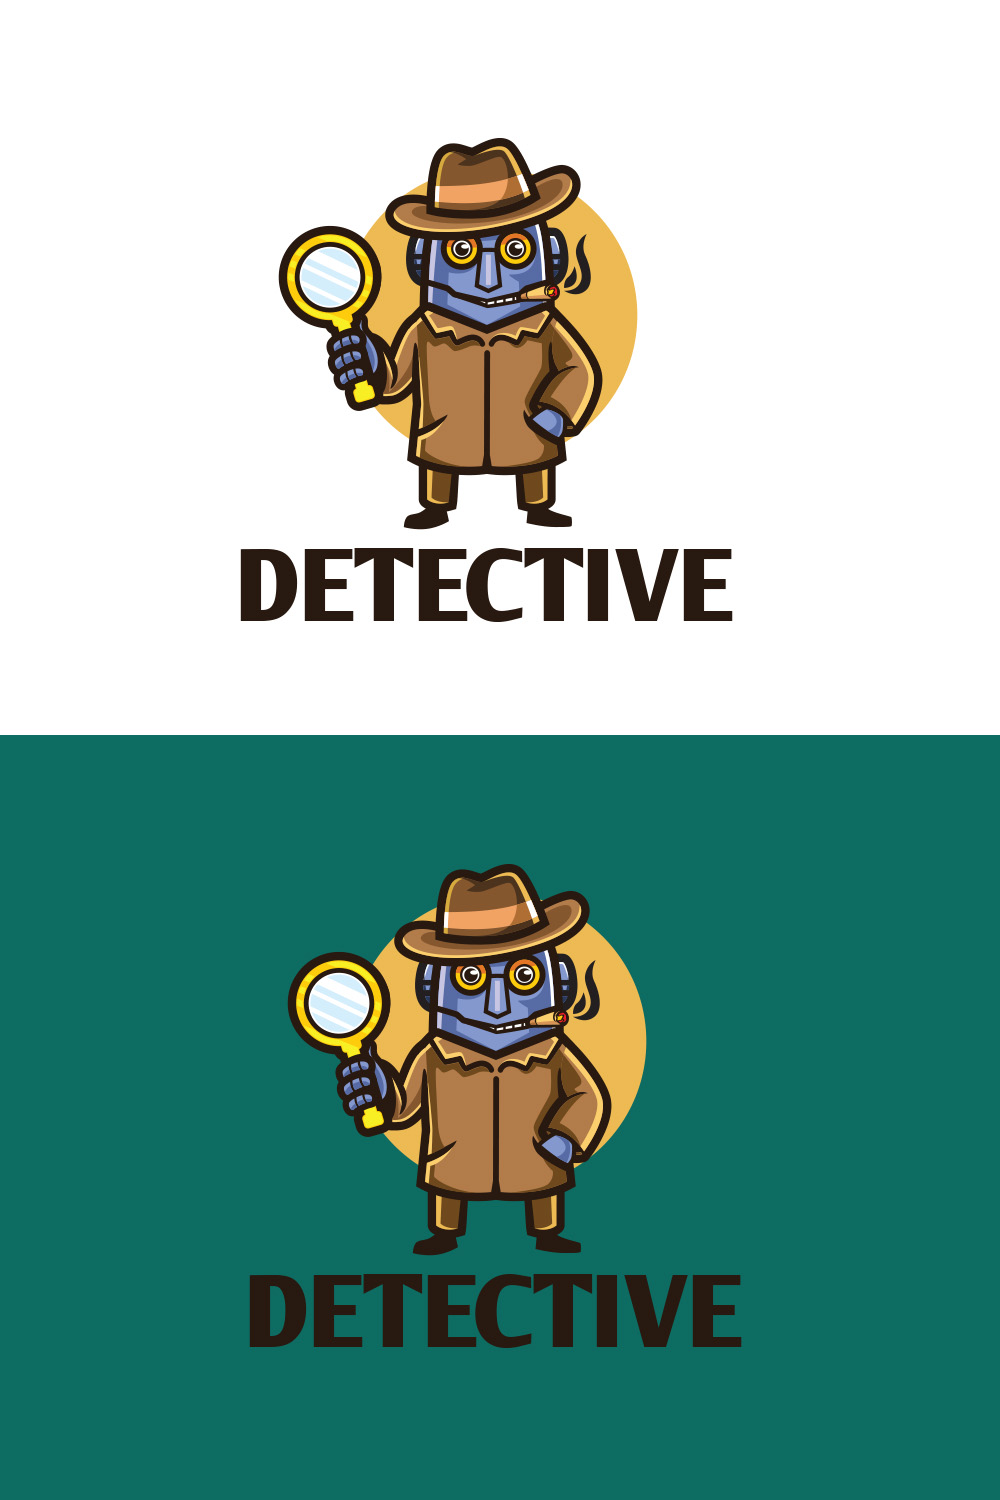 Detective Robot Character Logo Design pinterest preview image.